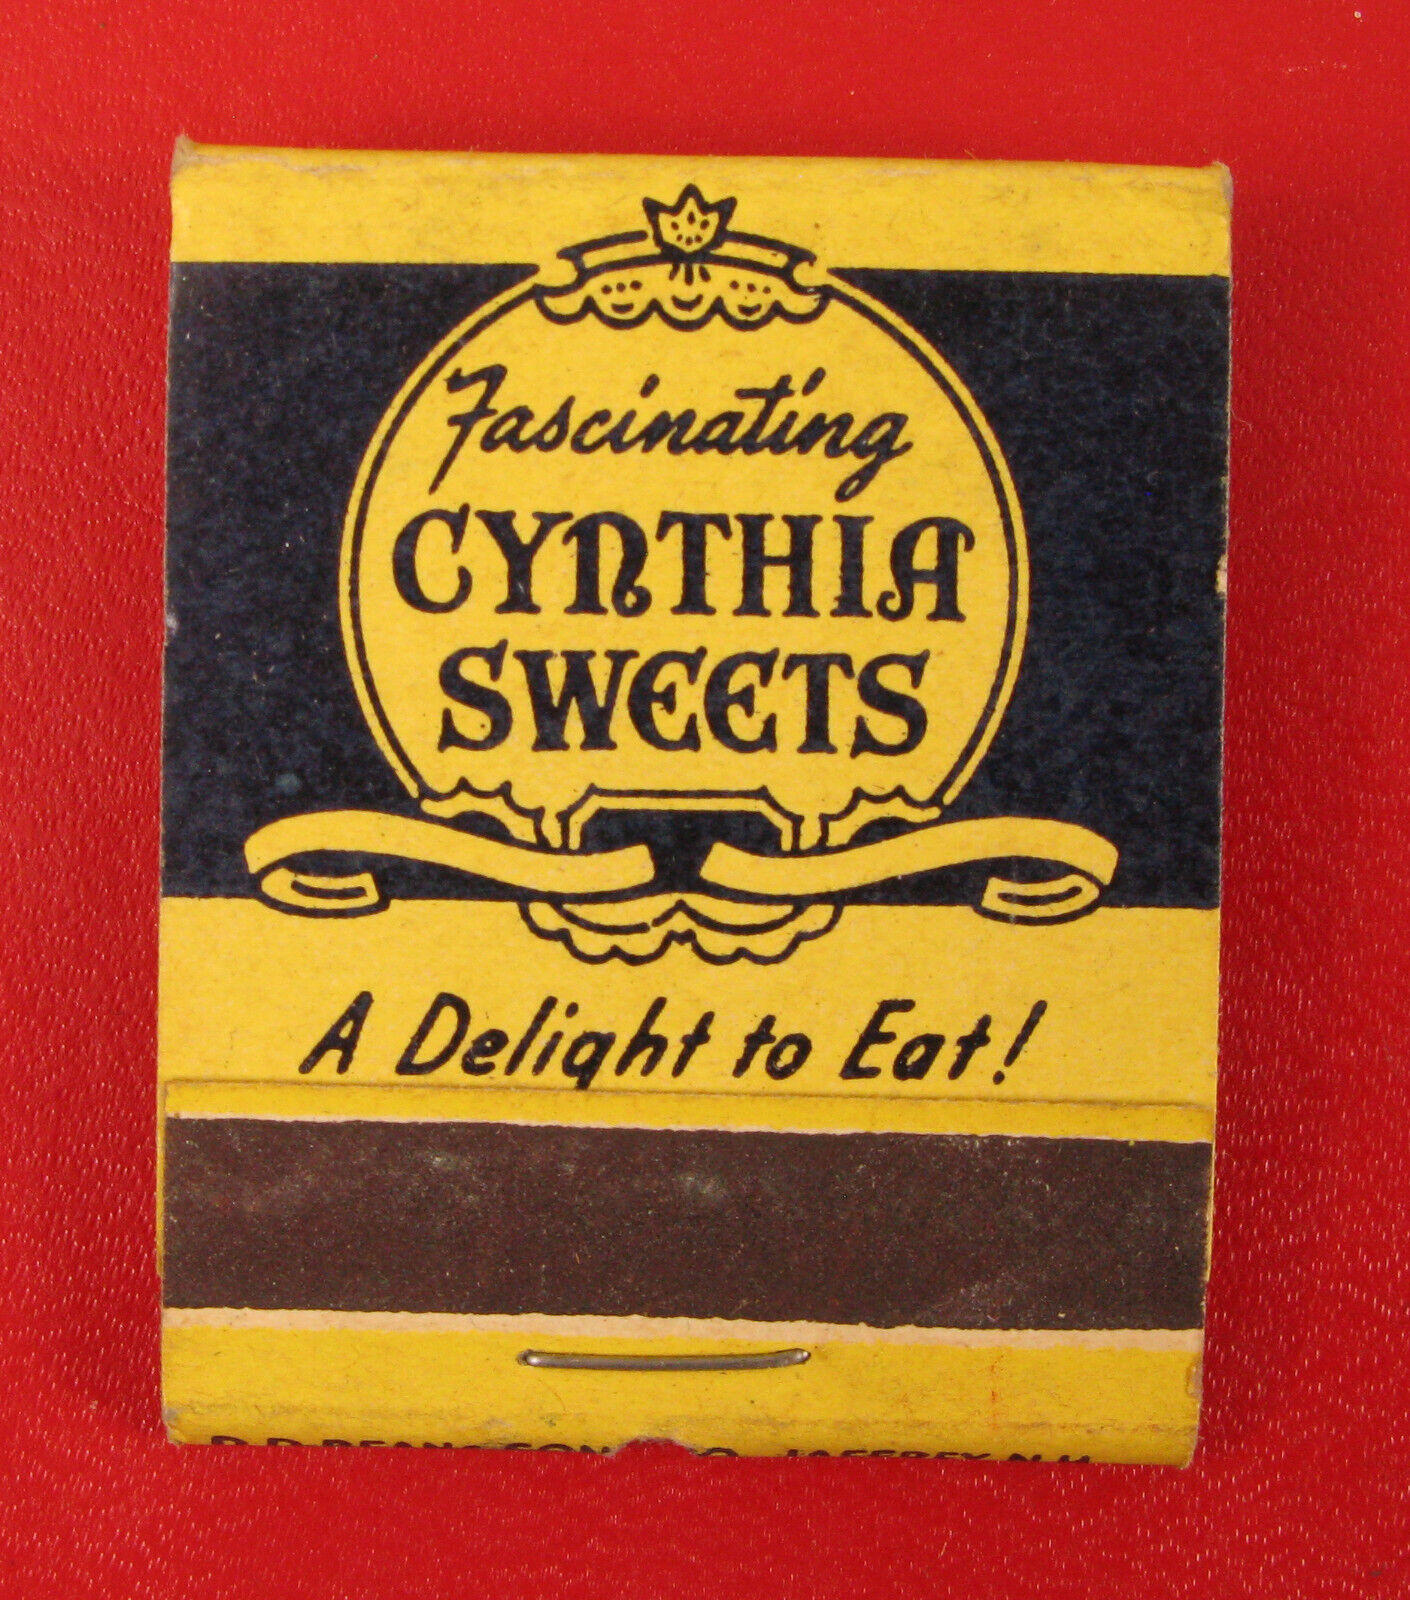 FASCINATING CYNTHIA SWEETS CHOCALATES BOSTON MASS ADVERTISING MATCHBOOK RARE 